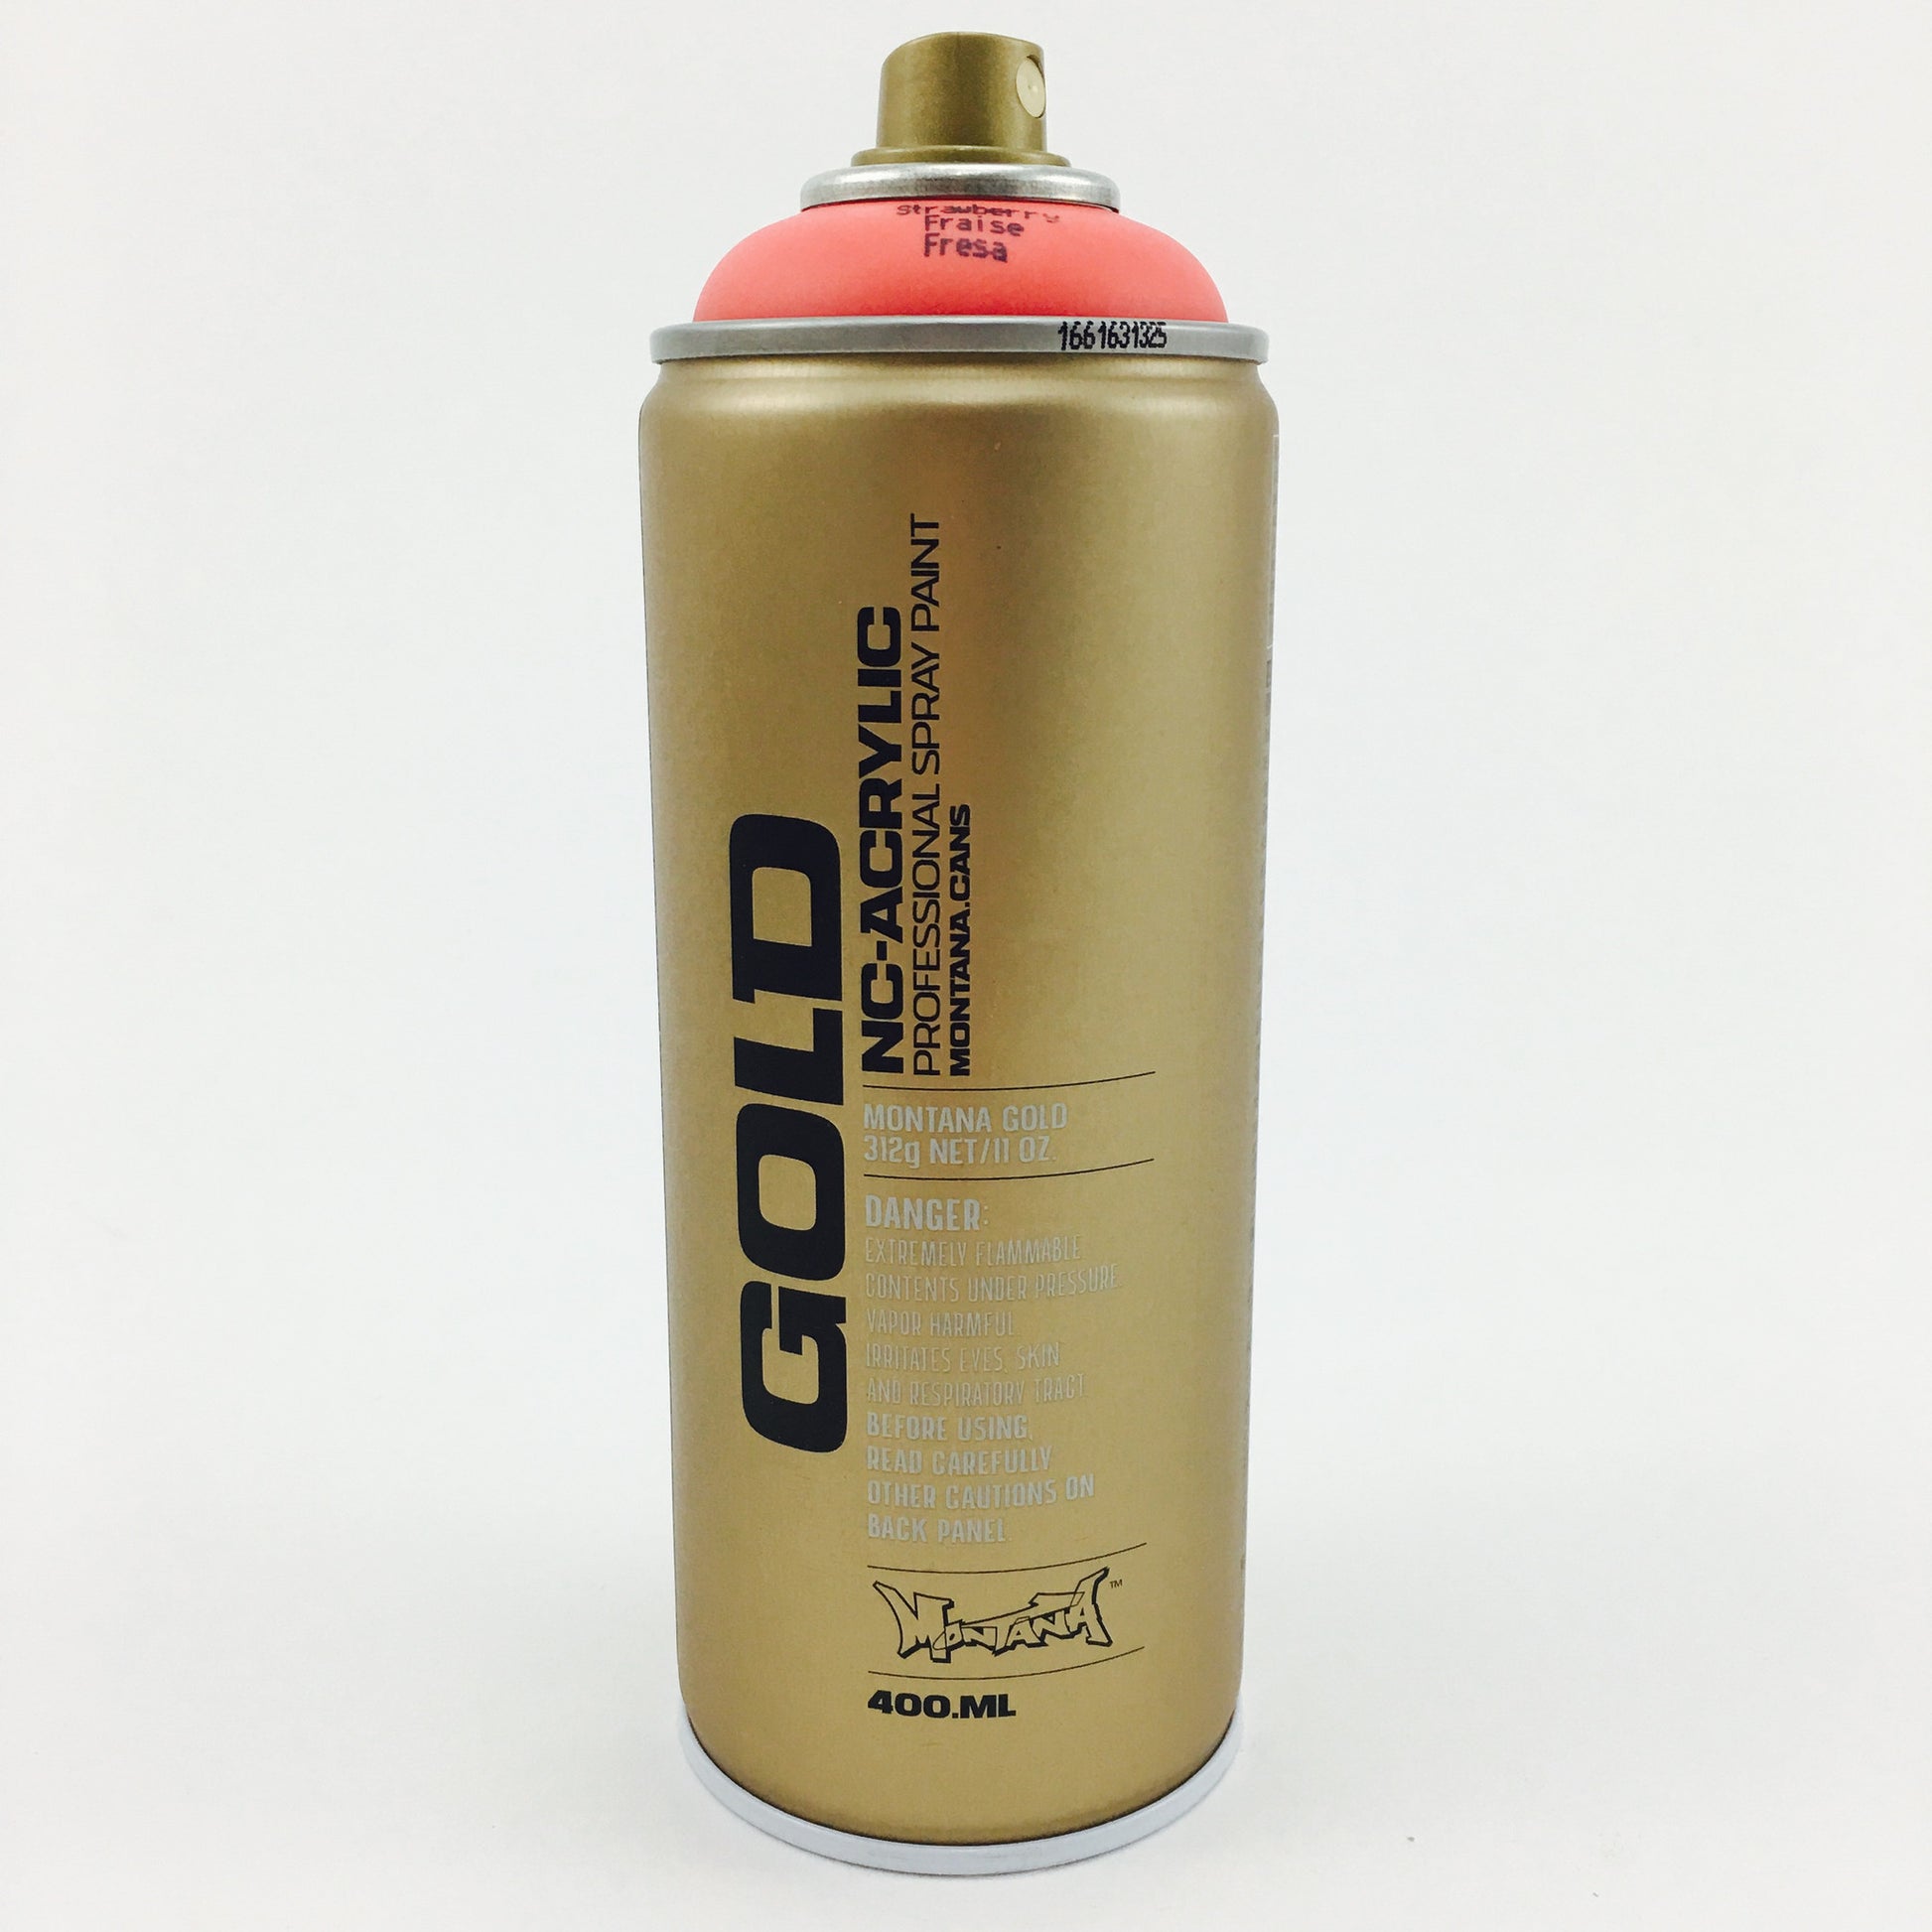 Montana Spray Paint - Gold Edition